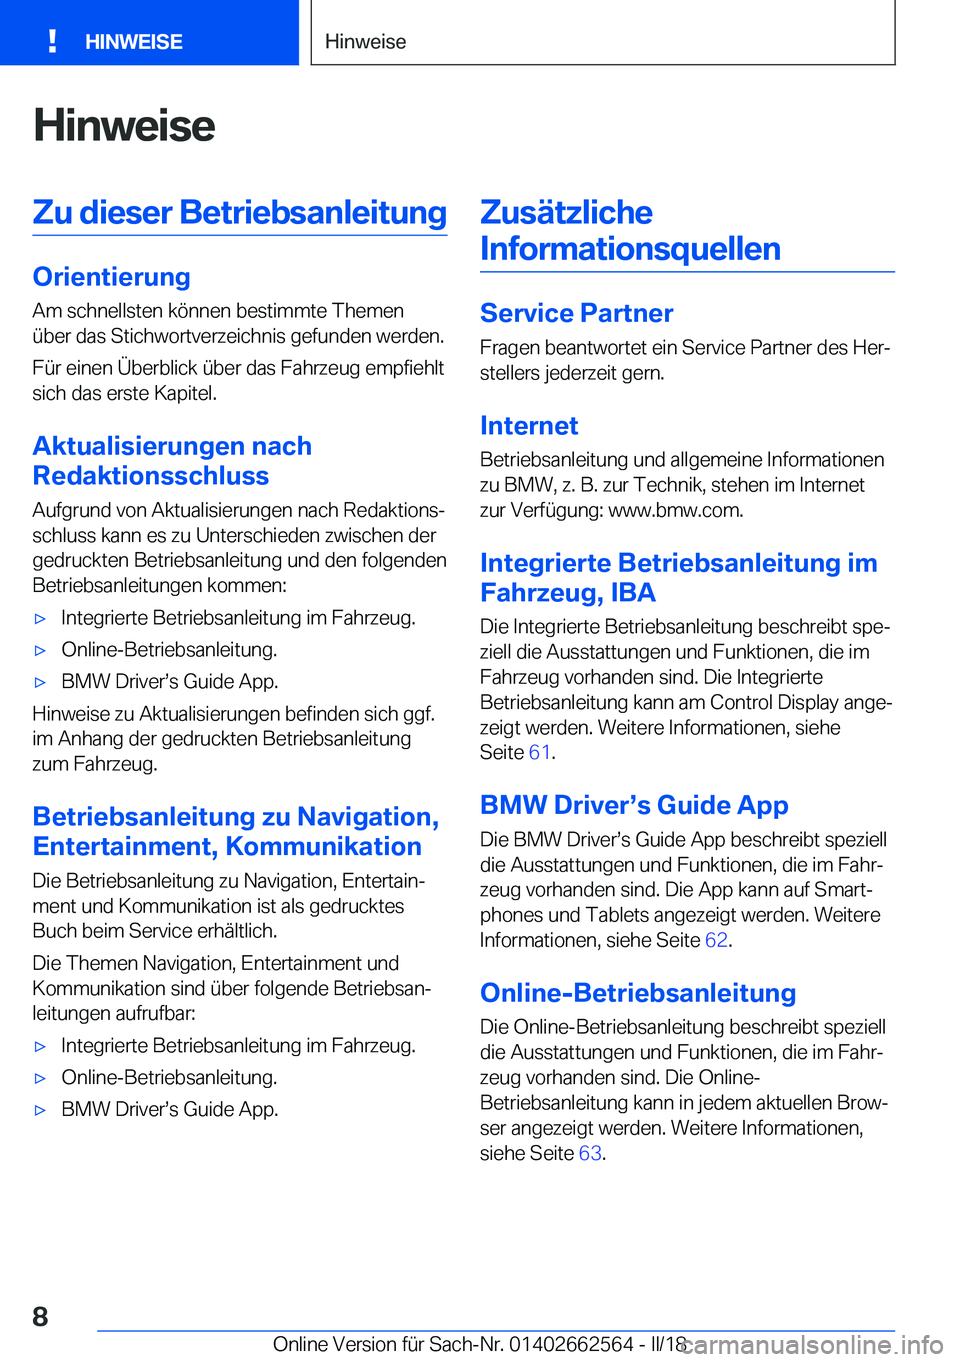 BMW M2 2018  Betriebsanleitungen (in German) �H�i�n�w�e�i�s�e�;�u��d�i�e�s�e�r��B�e�t�r�i�e�b�s�a�n�l�e�i�t�u�n�g
�O�r�i�e�n�t�i�e�r�u�n�g�A�m� �s�c�h�n�e�l�l�s�t�e�n� �k�